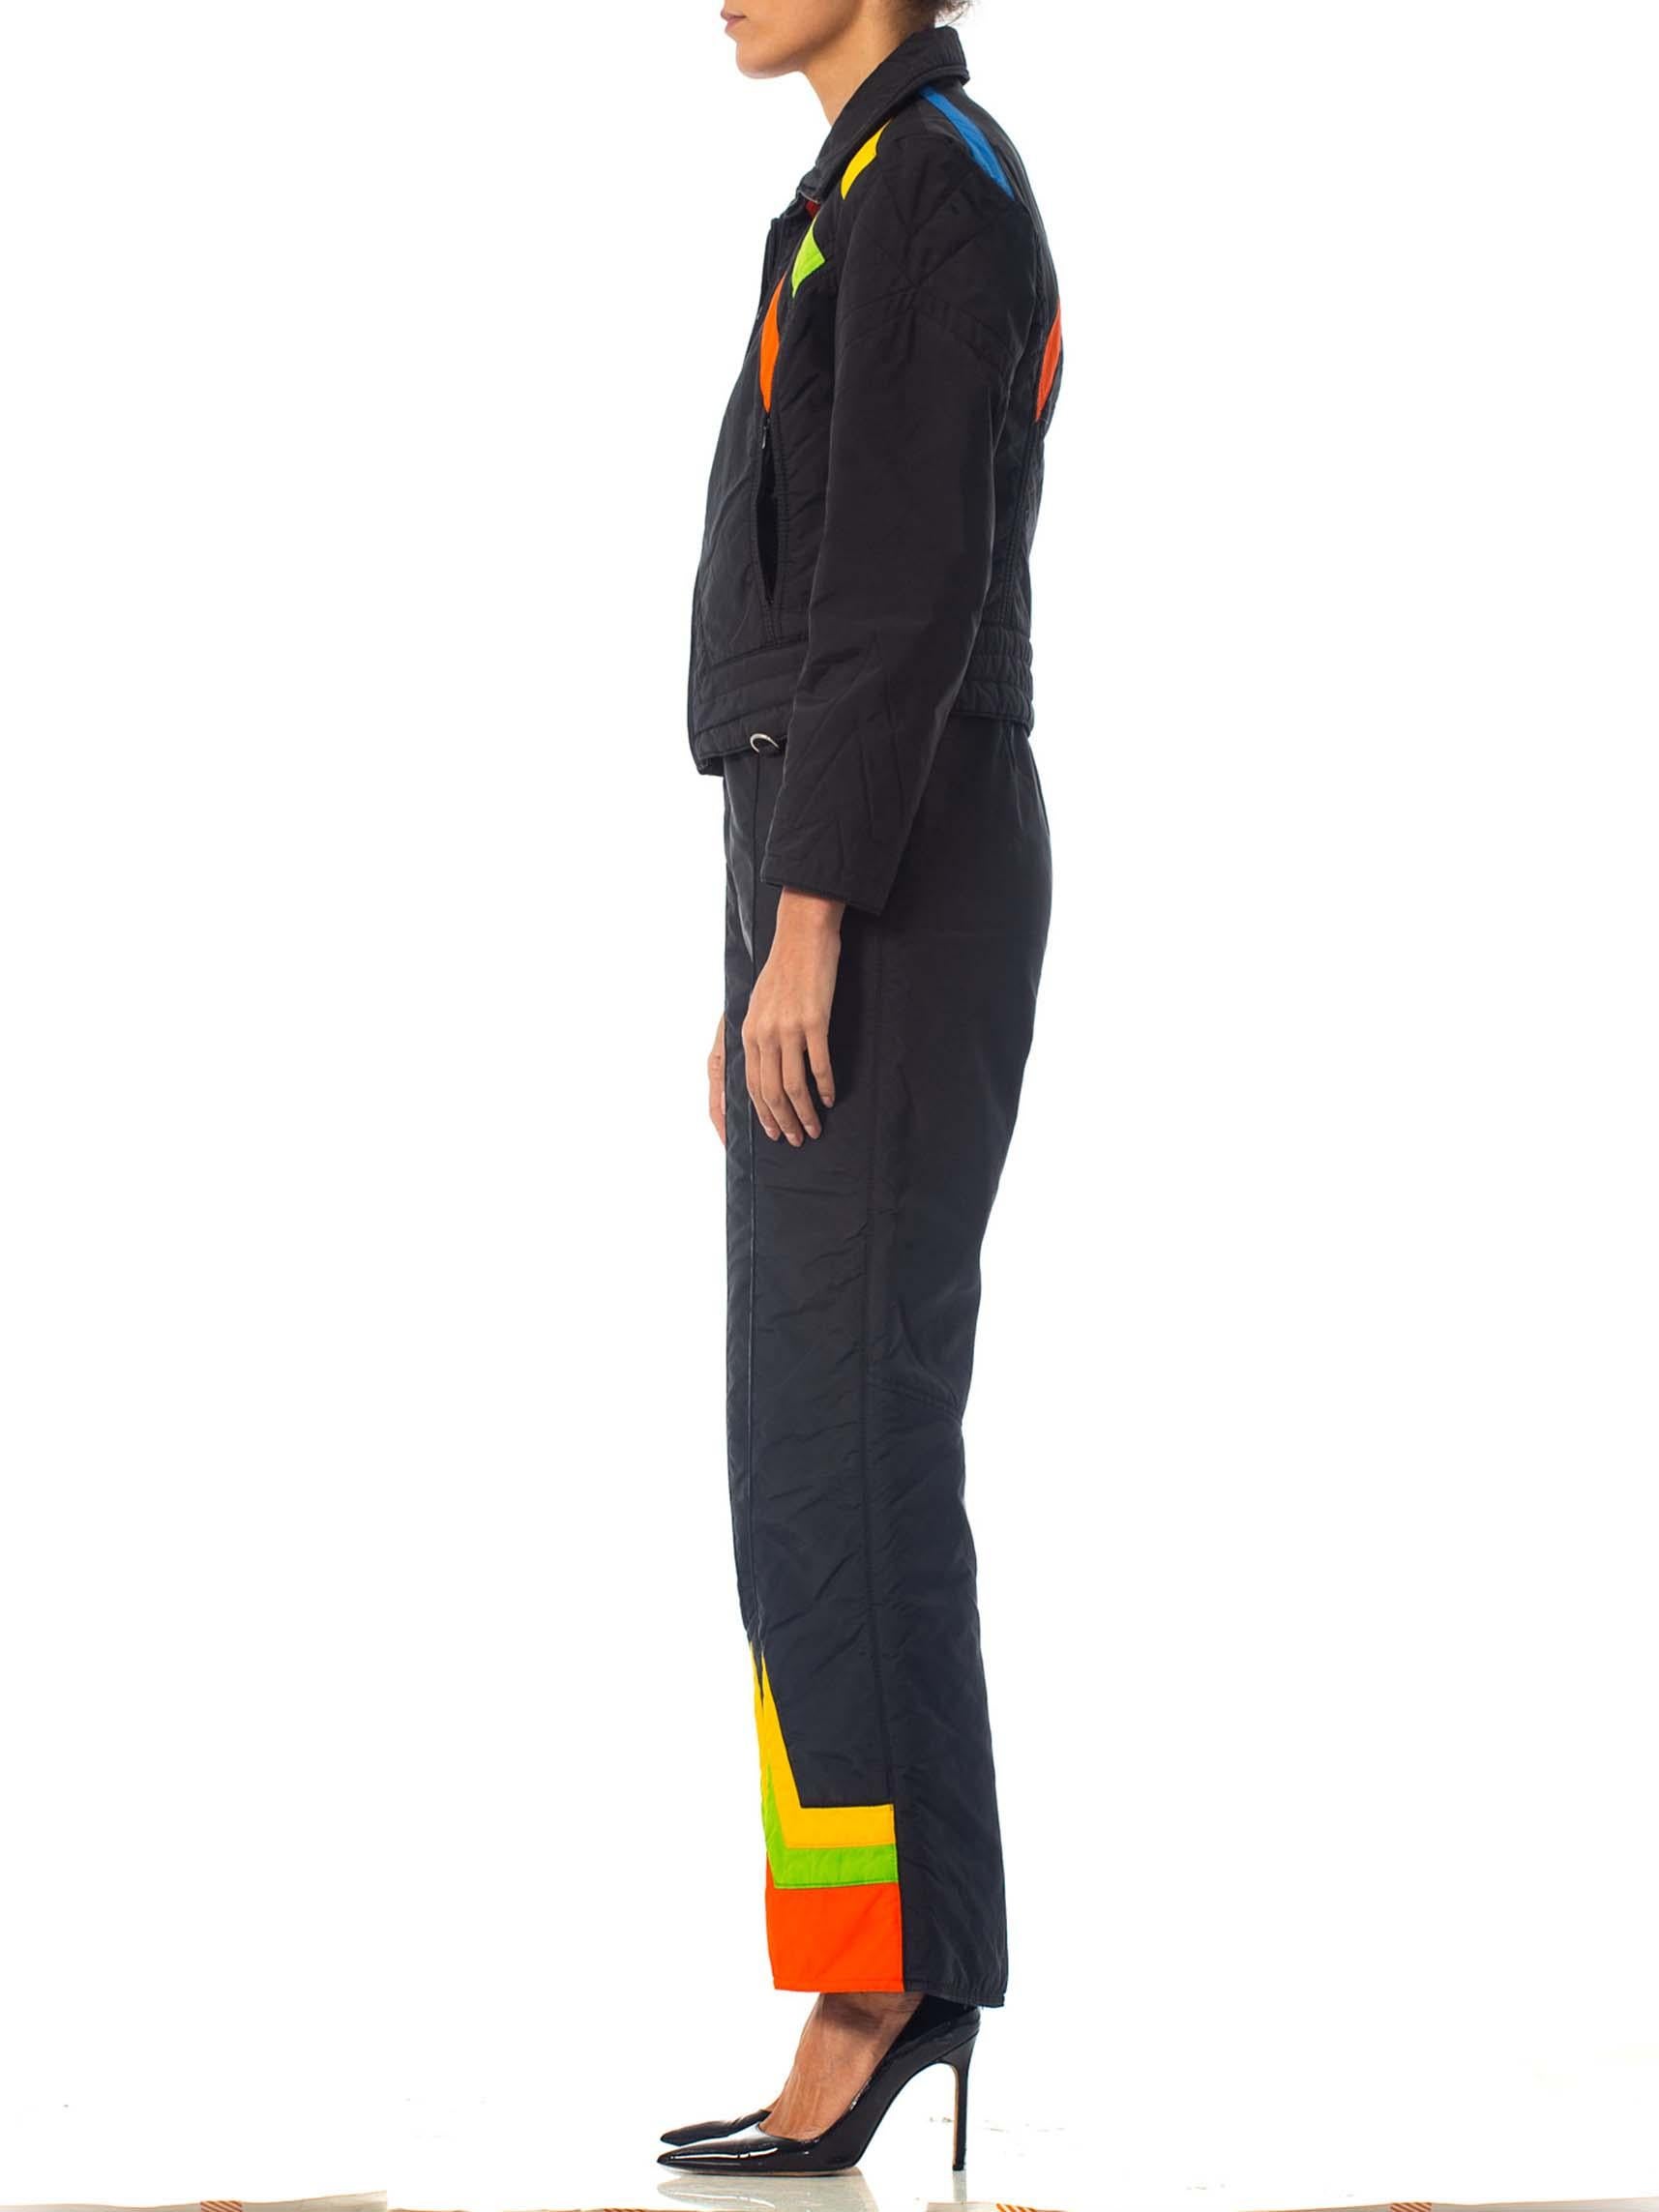 Women's 1970S Black Polyester Ski Wear Ensemble With Orange & Yellow Details